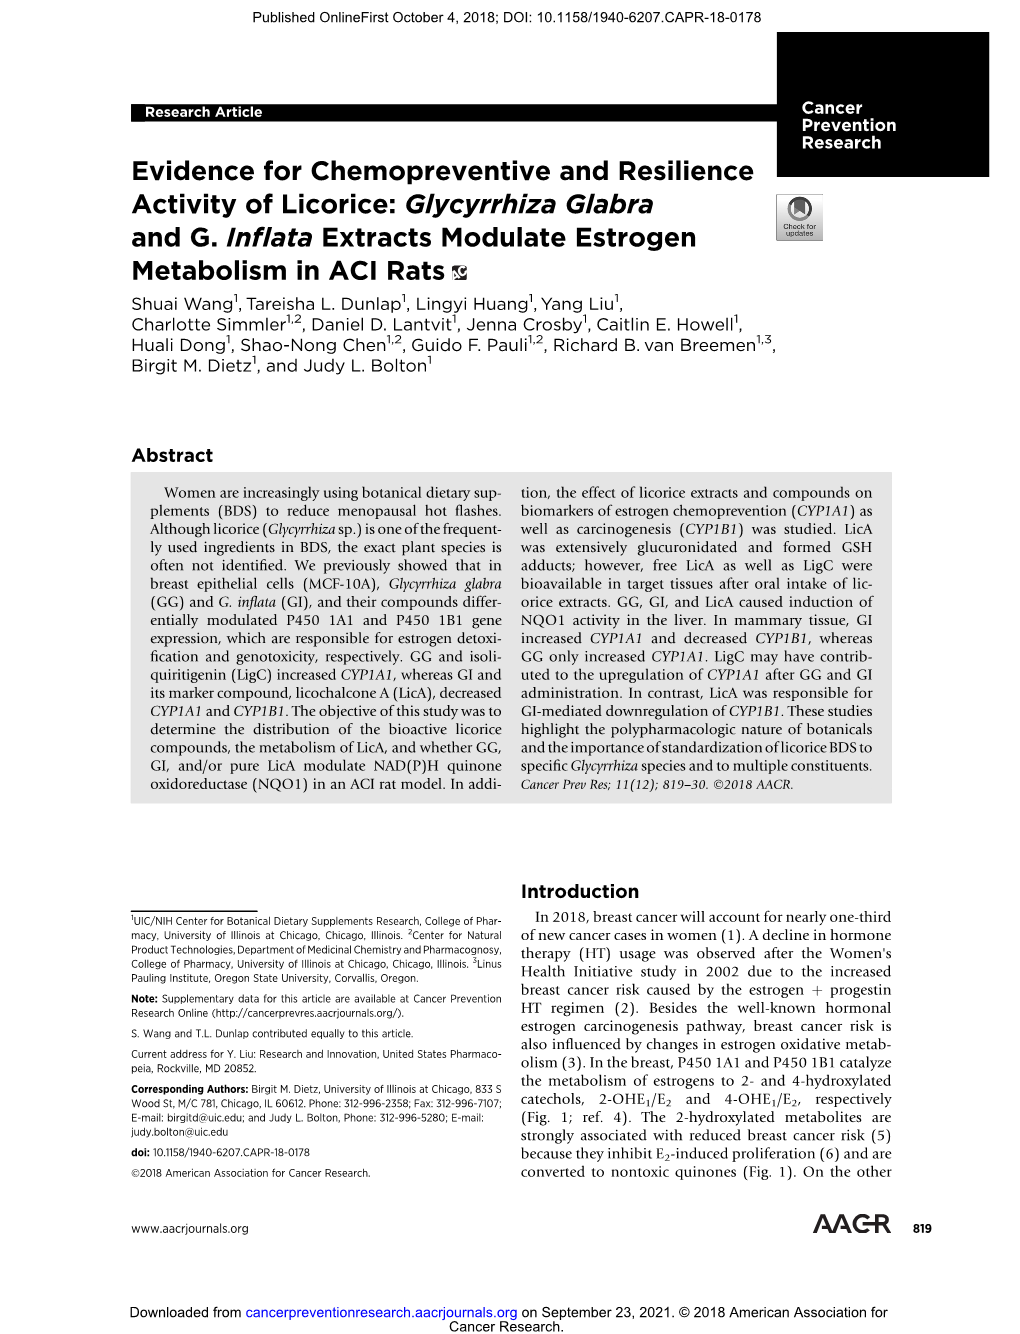 Evidence for Chemopreventive and Resilience Activity of Licorice: Glycyrrhiza Glabra and G